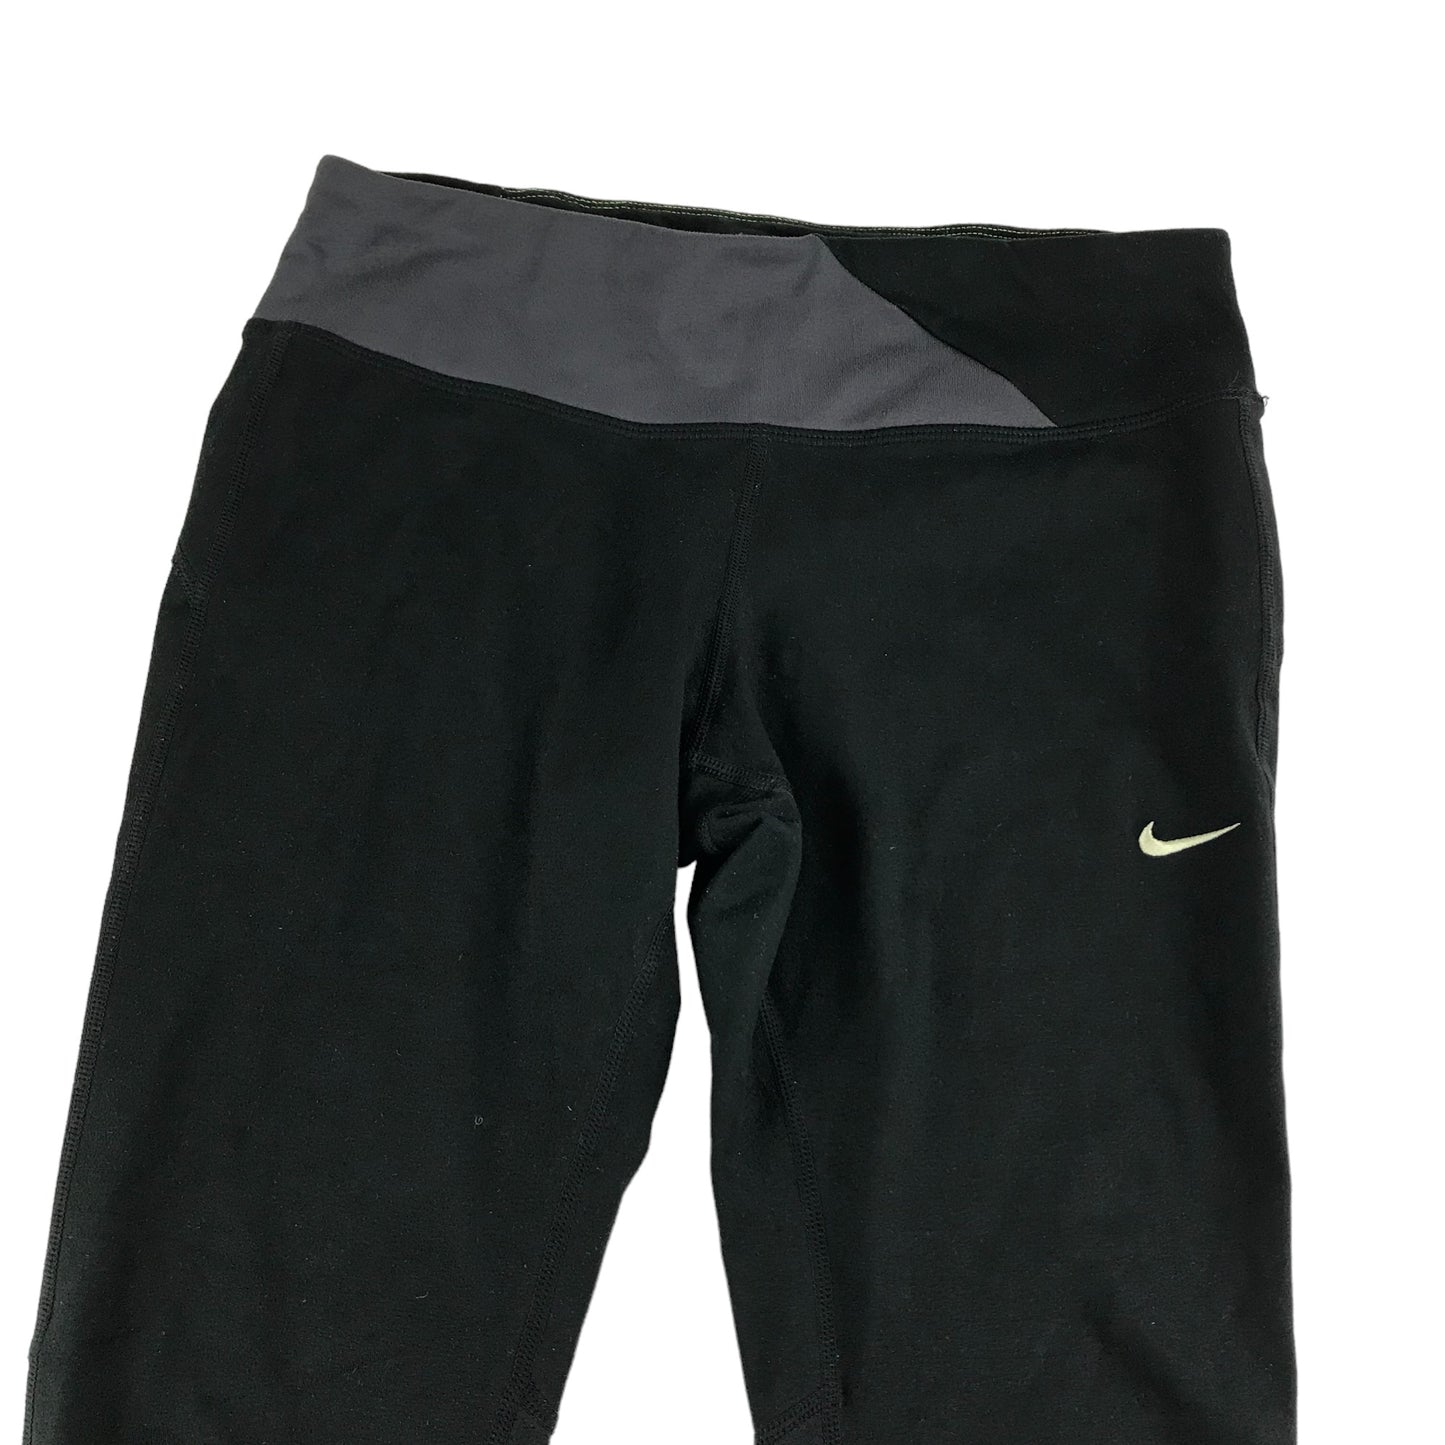 Nike Sport Leggings Size S Black Stretchy Dri-Fit